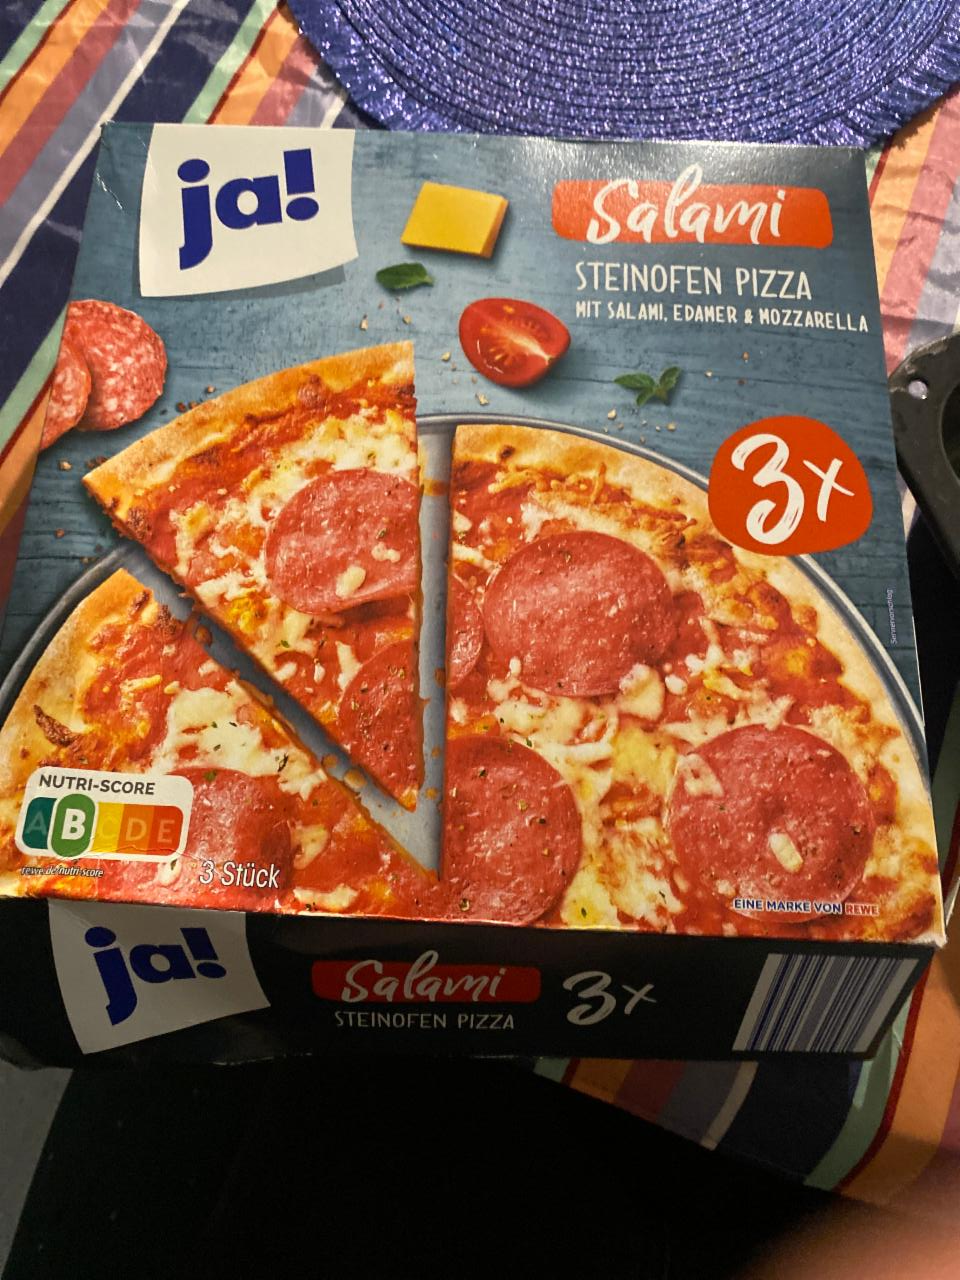 Fotografie - 3x Steinofen Pizza Salami Ja!